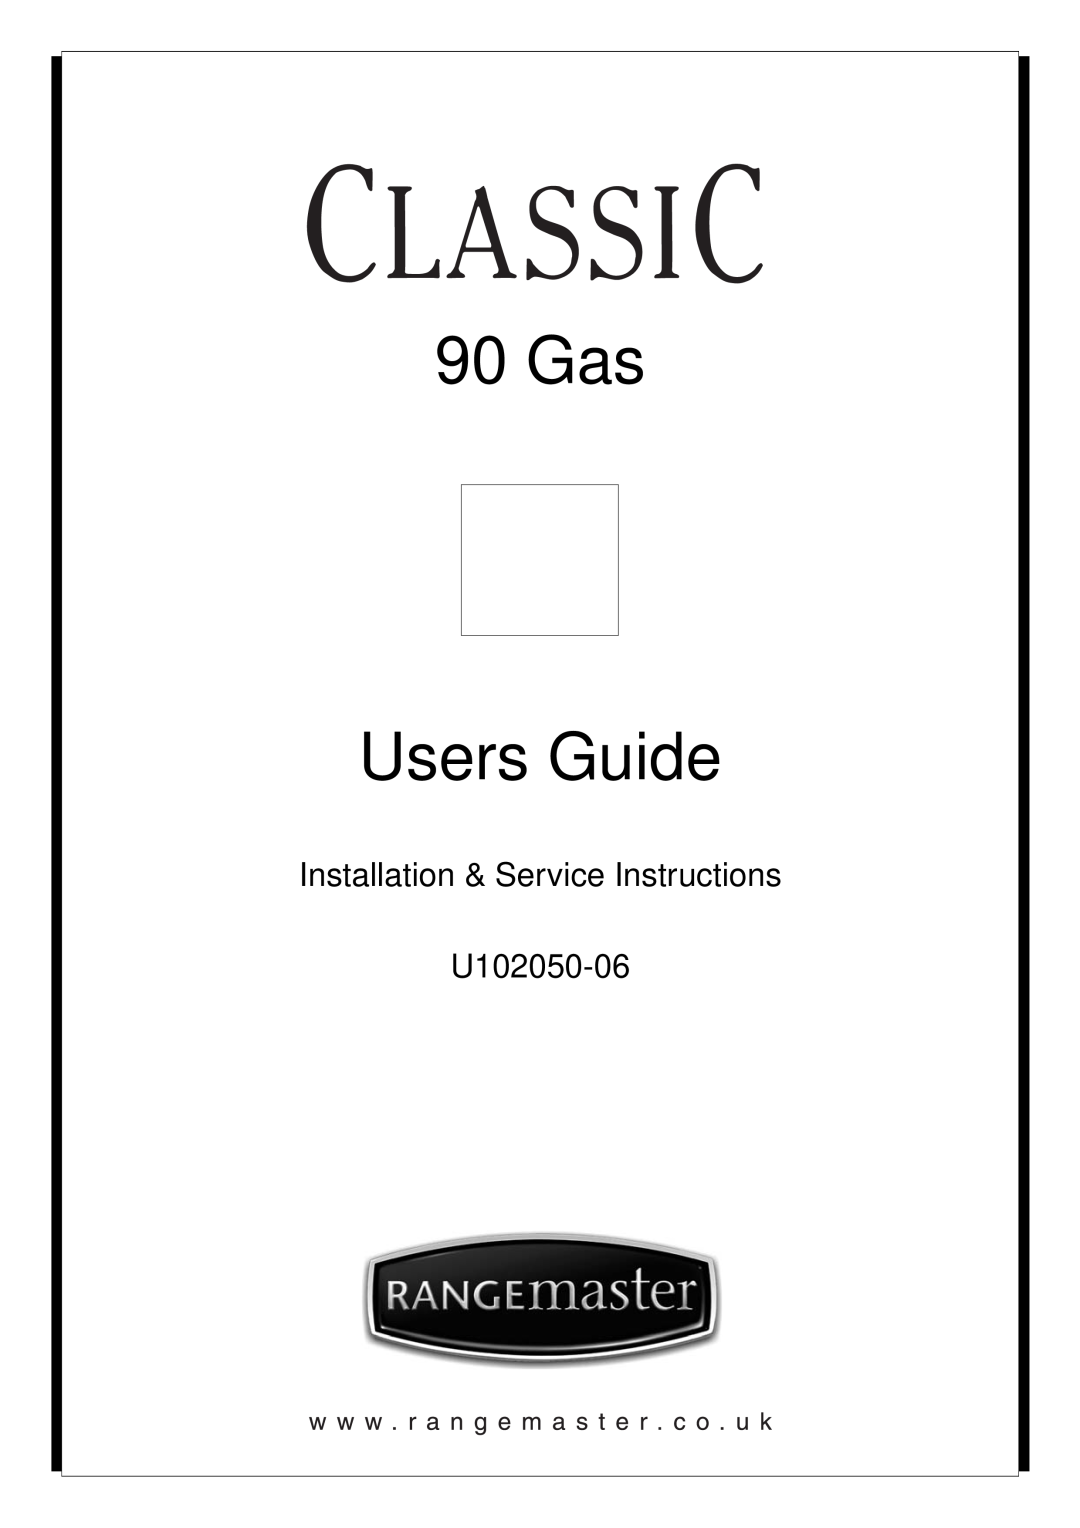 Rangemaster 90 Gas manual Gas Users Guide, Installation & Service Instructions U102050-06 